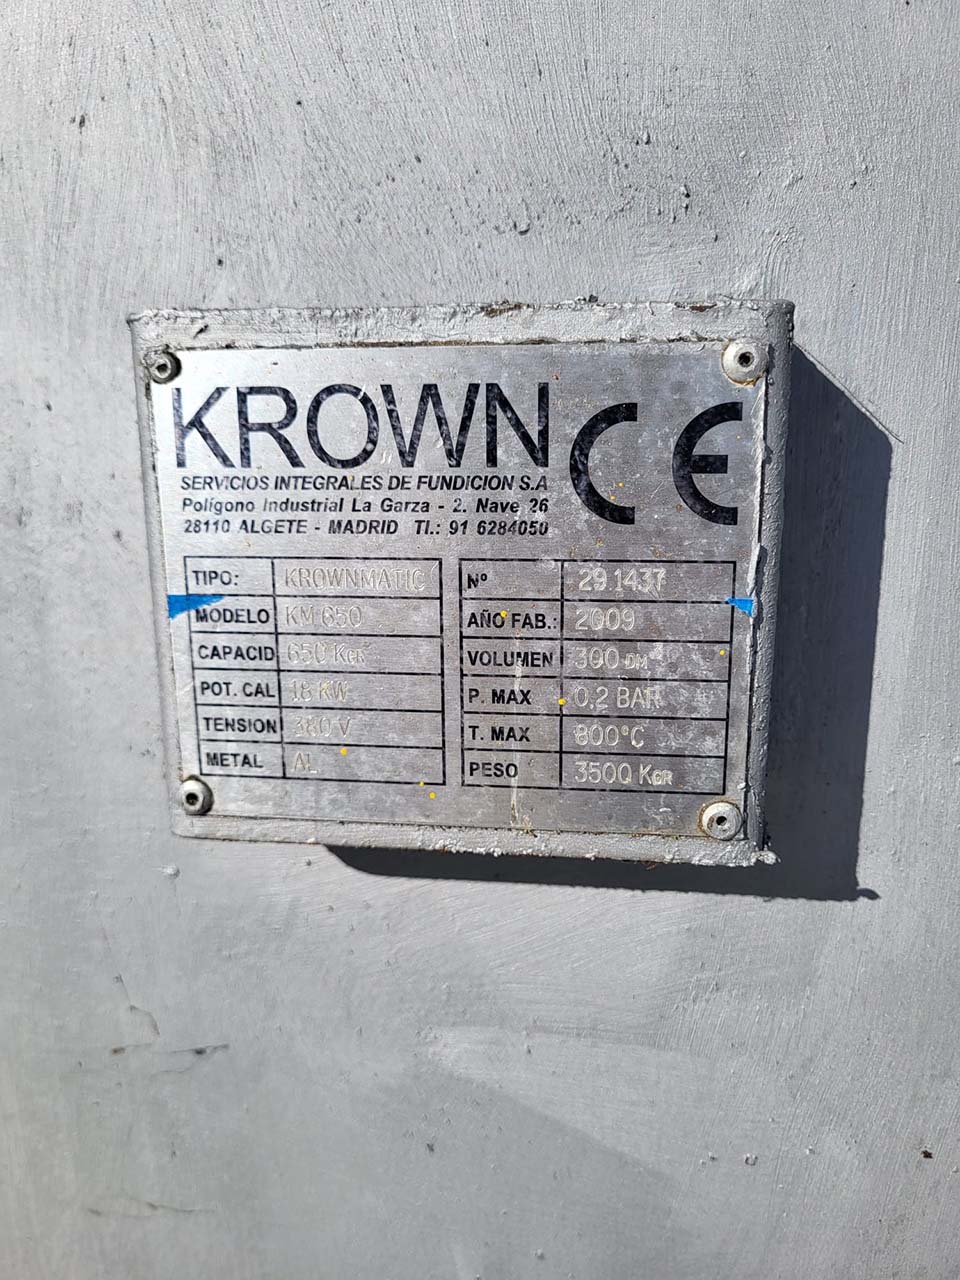 Krown Krownmatic KM 650 dosing furnace O1759, used